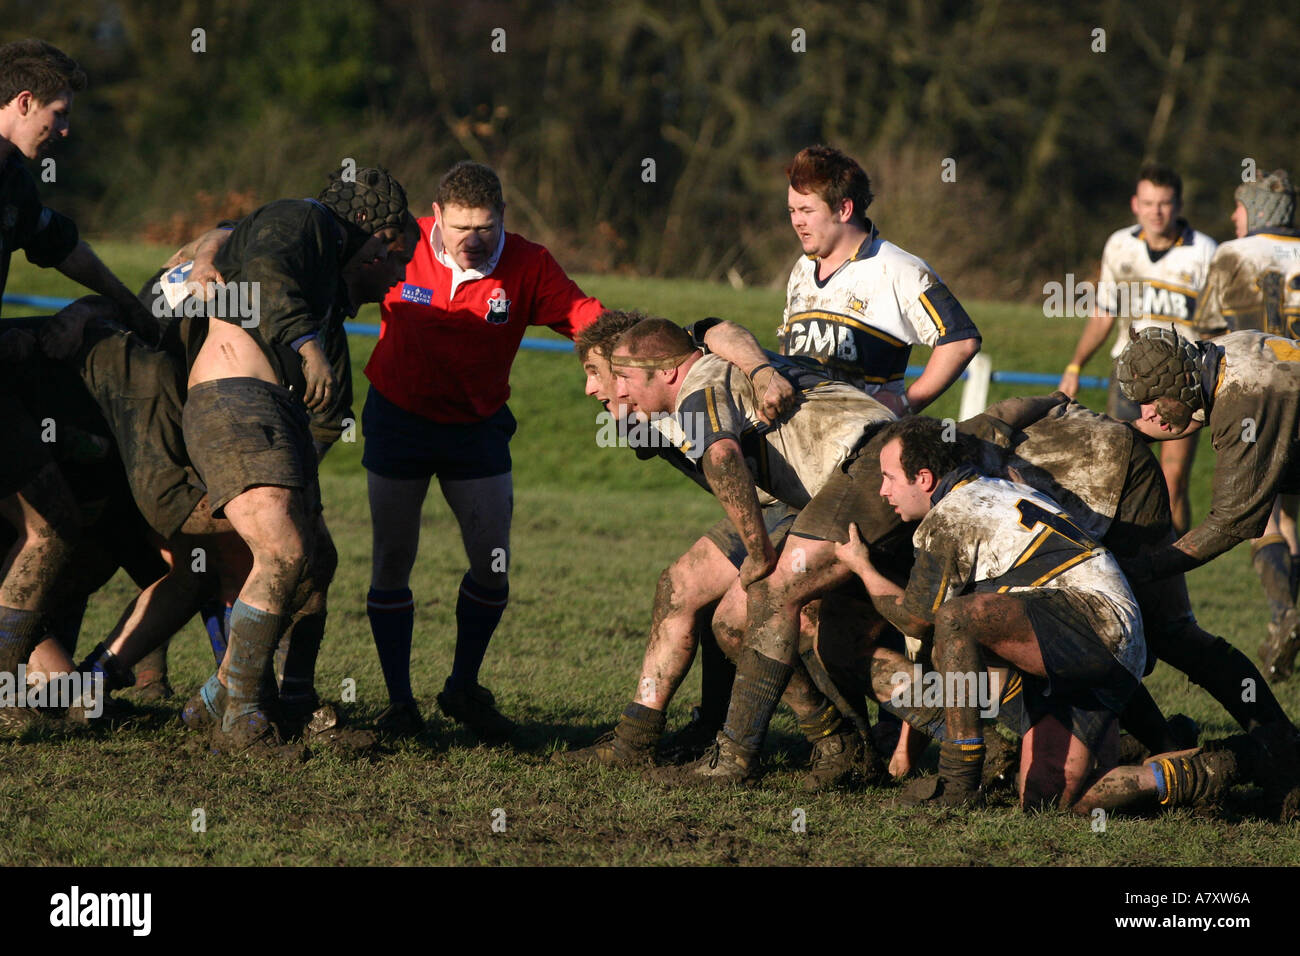 A club Rugby Union match England UK between Yarnbury and Goole Yorkshire Stock Photo